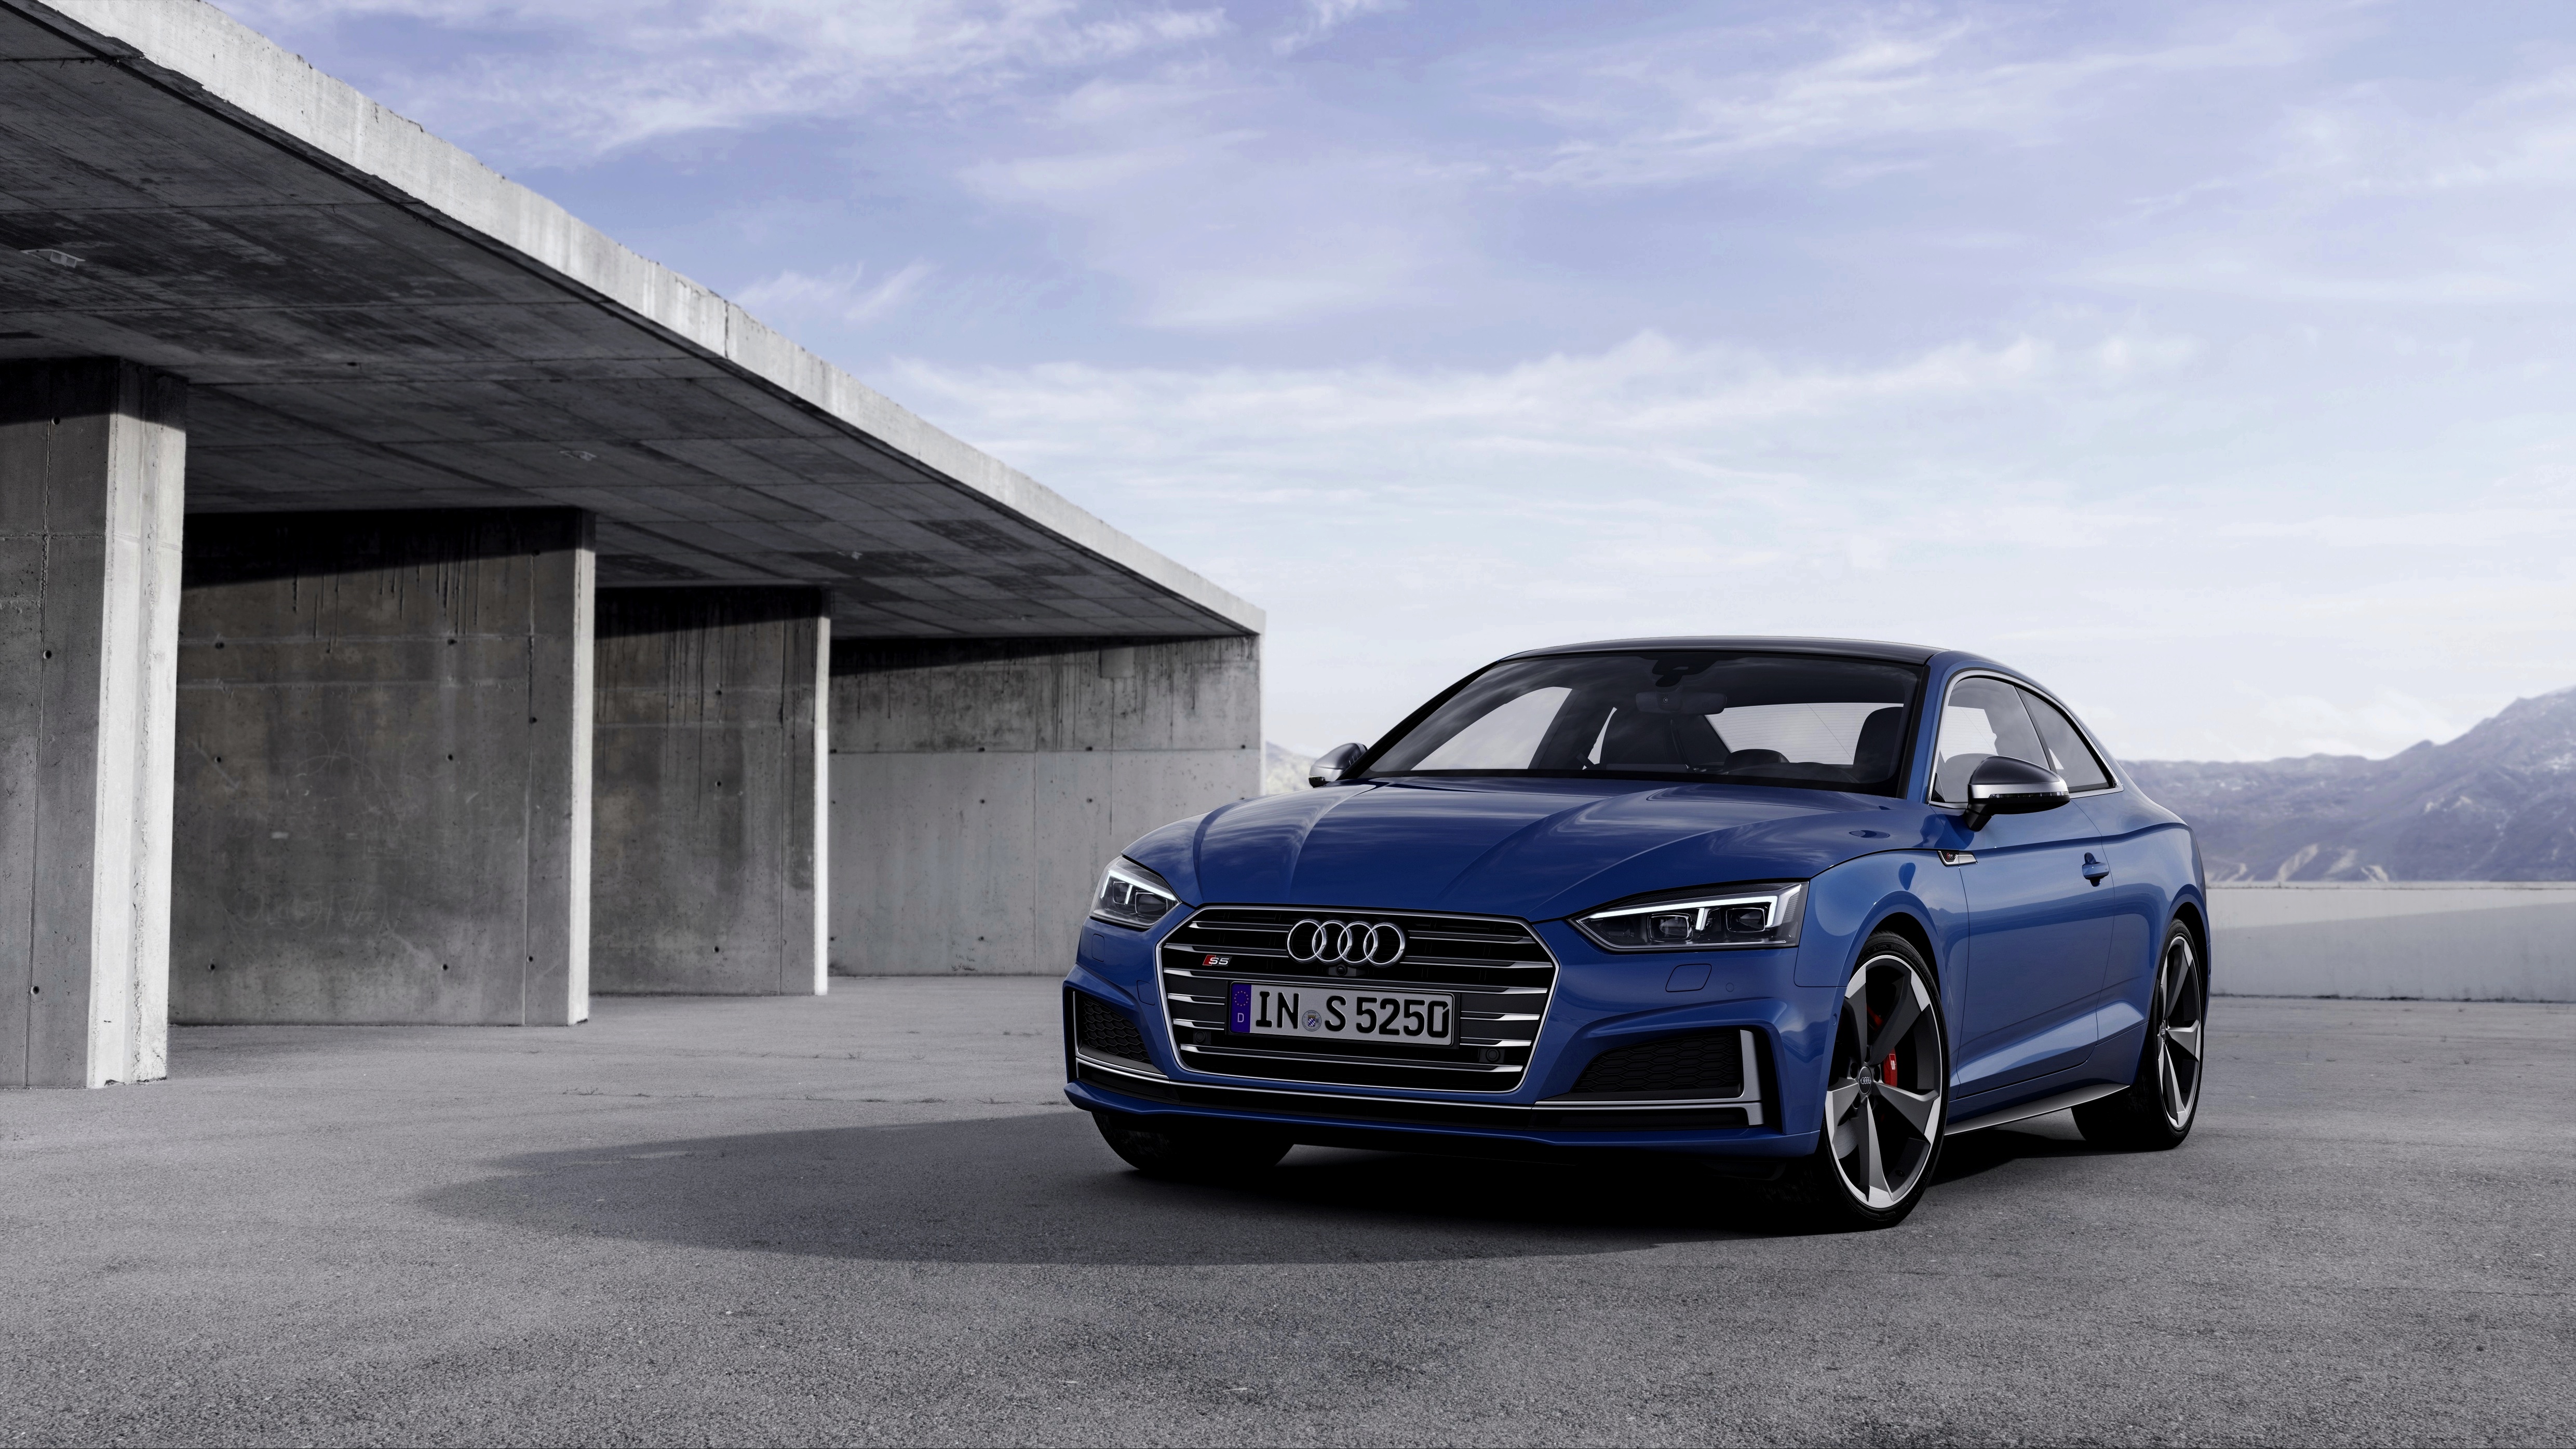 Audi Audi A5 Blue Car Car Luxury Car Vehicle 4961x2791